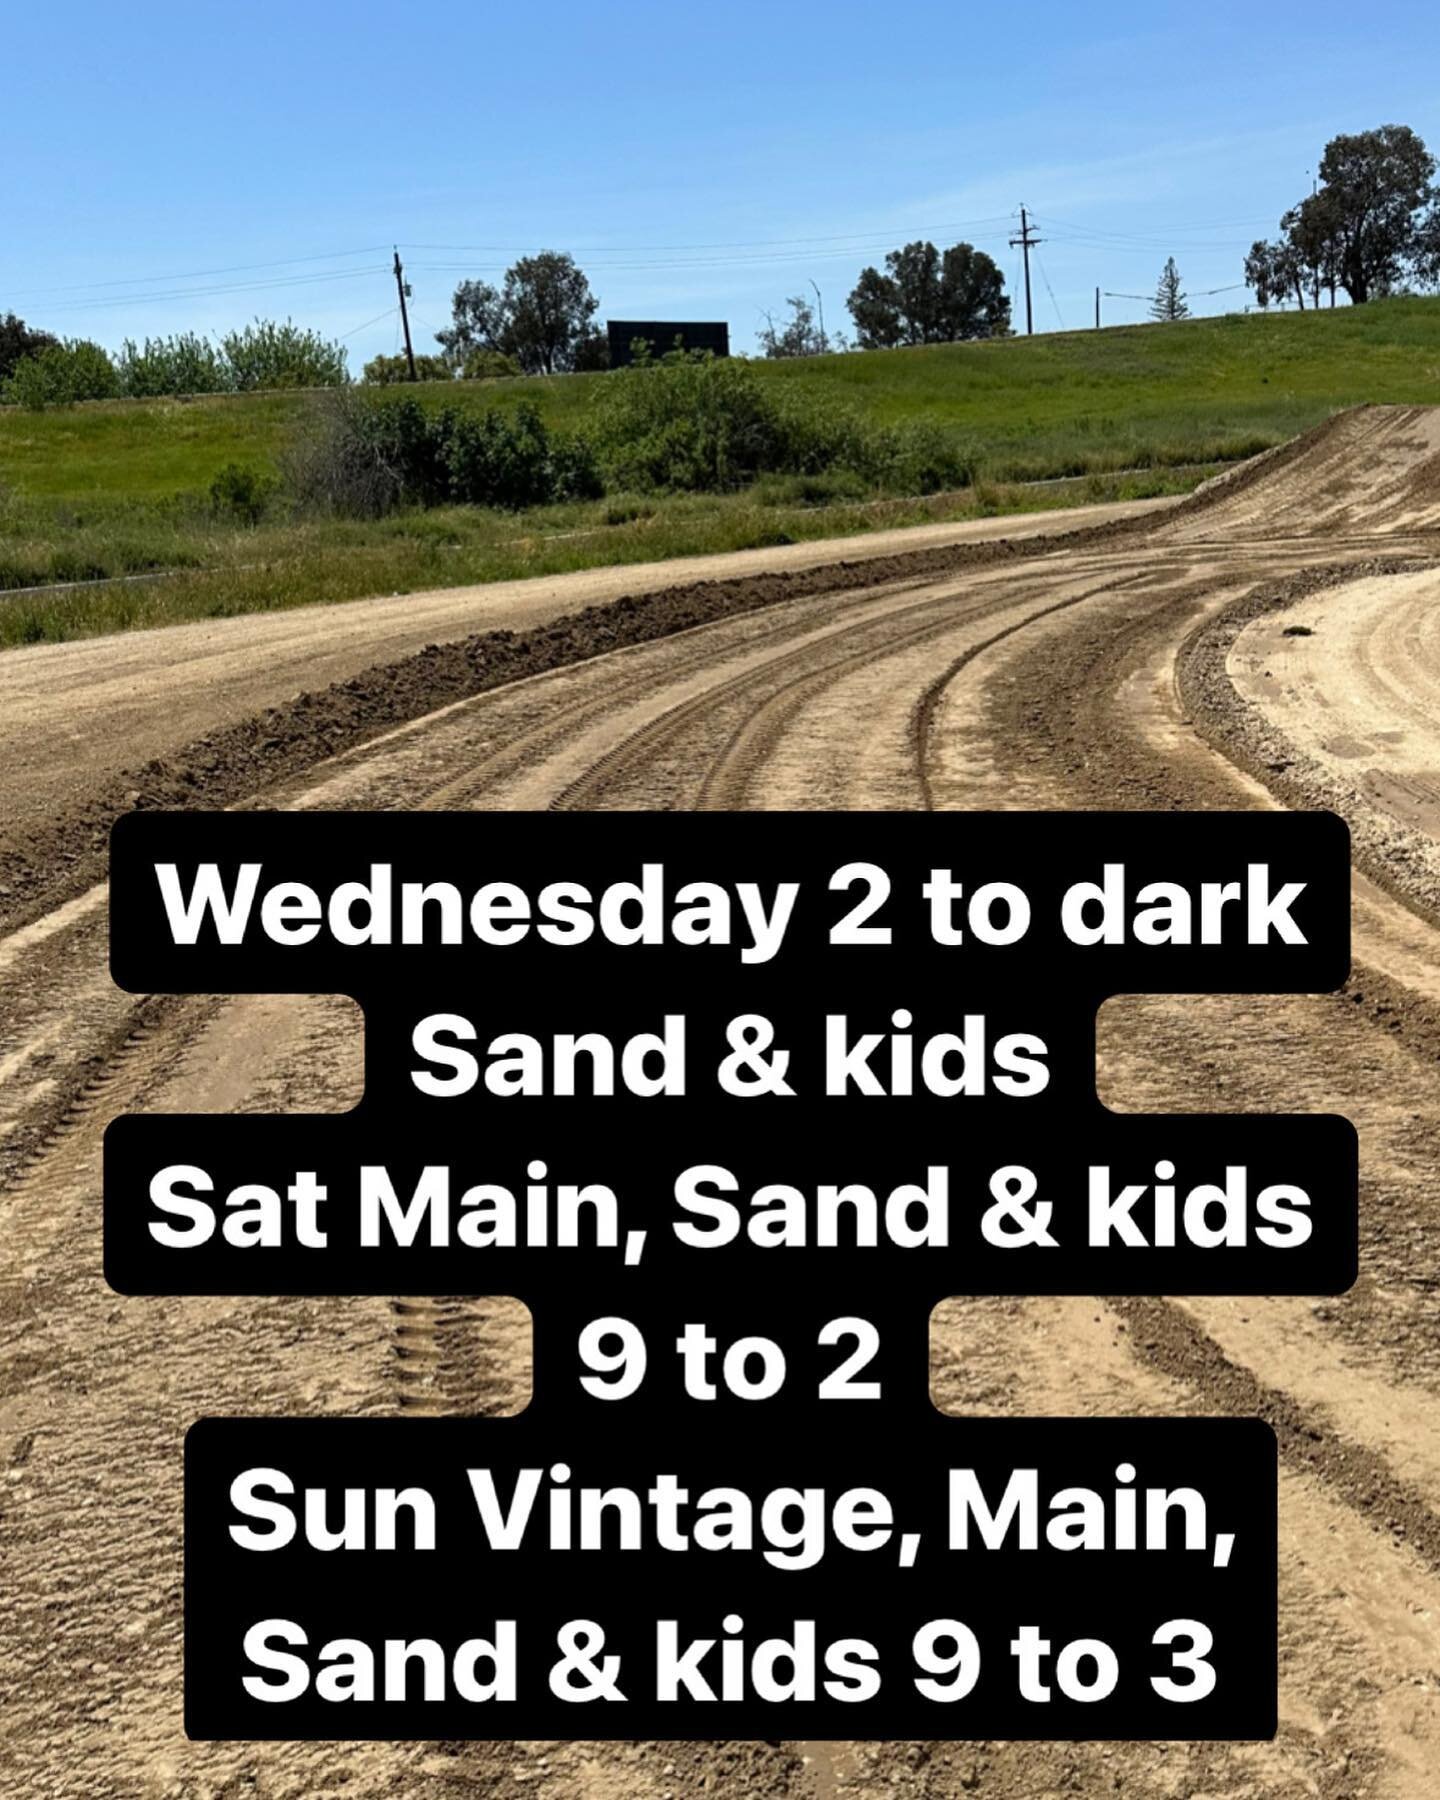 This week!
Wednesday 2 to dark
Sand &amp; kids
Sat Main, Sand &amp; kids
9 to 2
Sun Vintage, Main, Sand &amp; kids 9 to 3